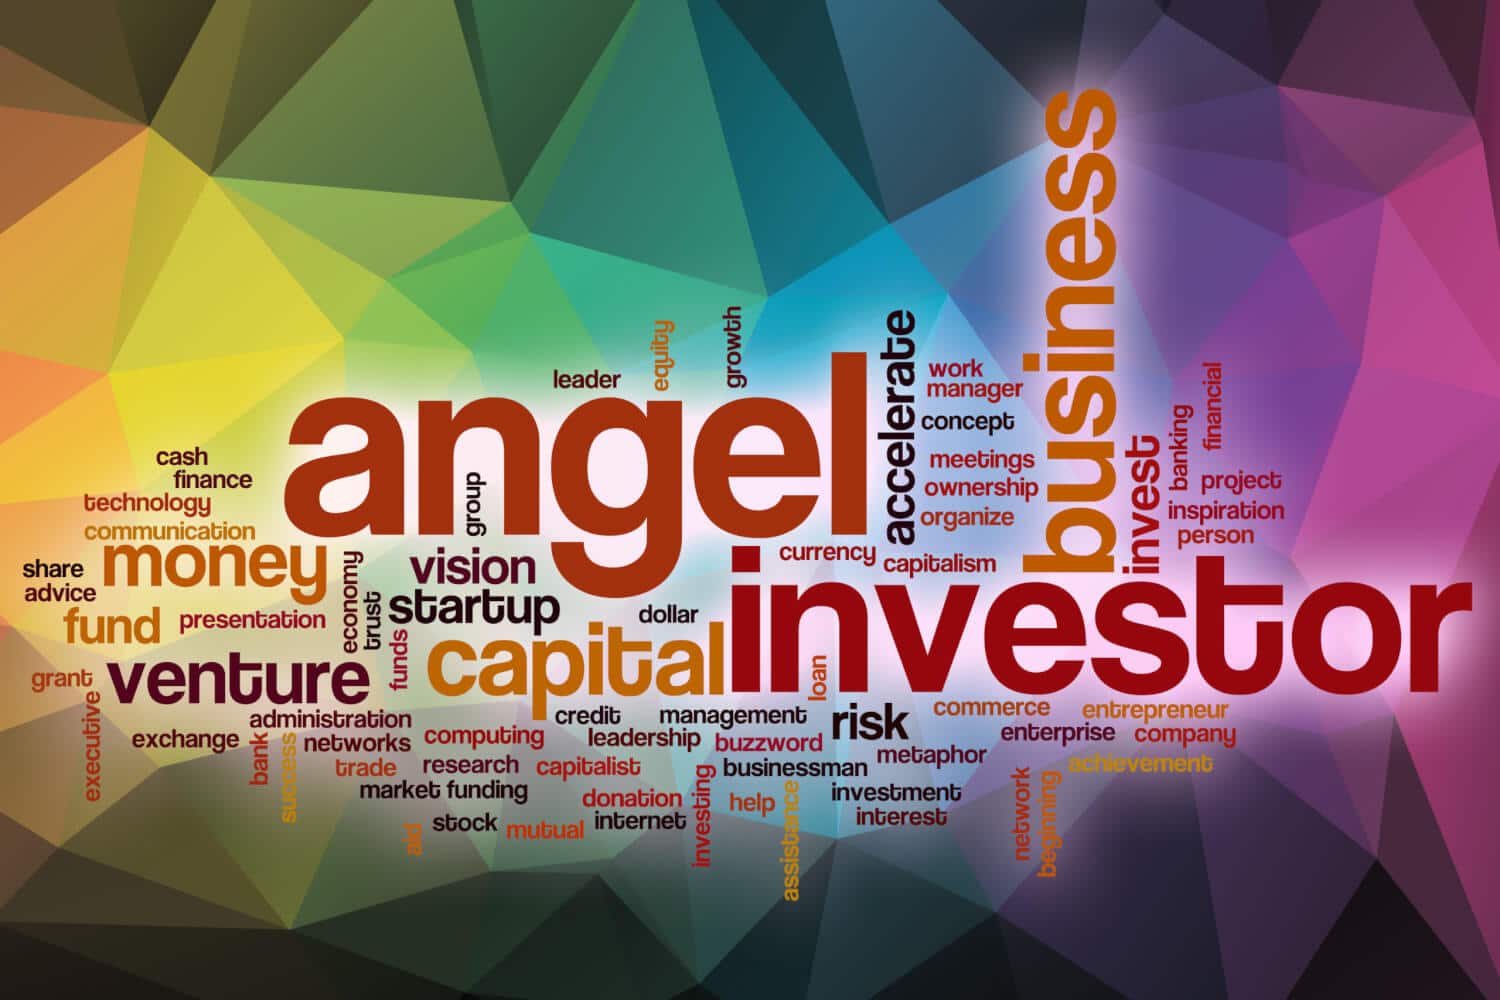 How do I find an Angel Investor?